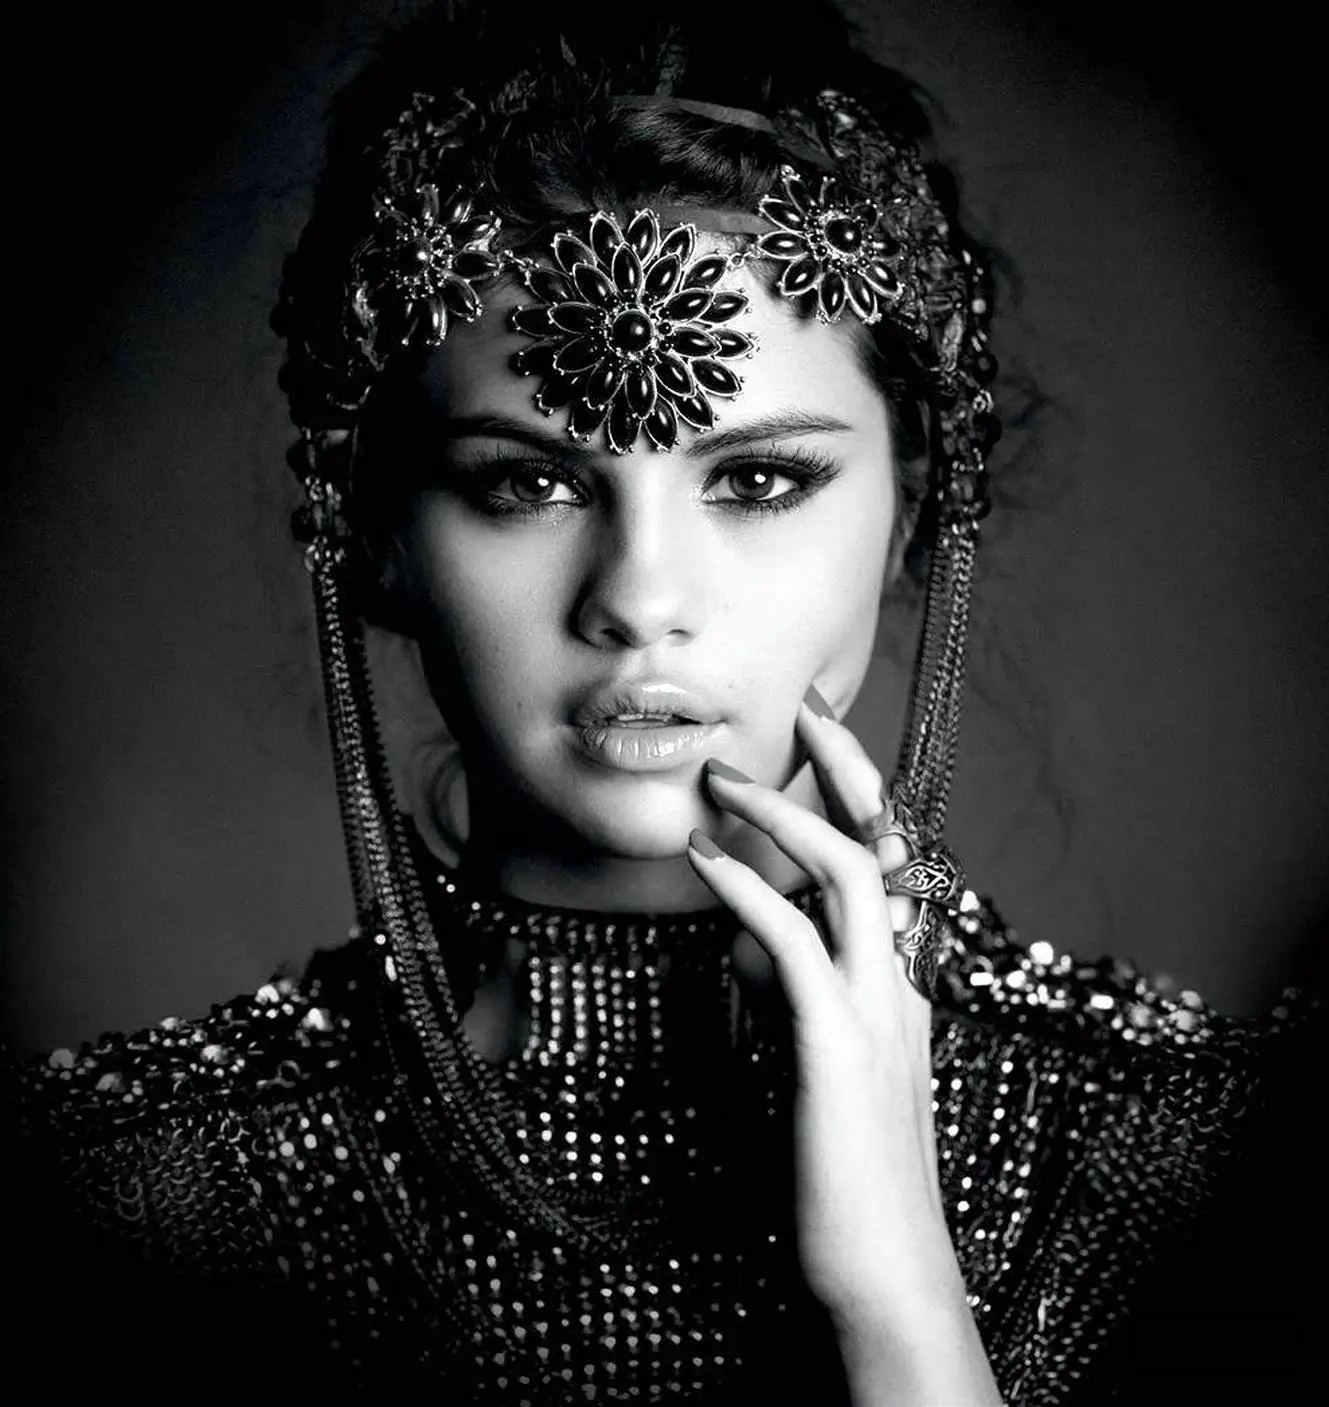 Gallery Stars Dance Album Selena Gomez Wiki Fandom